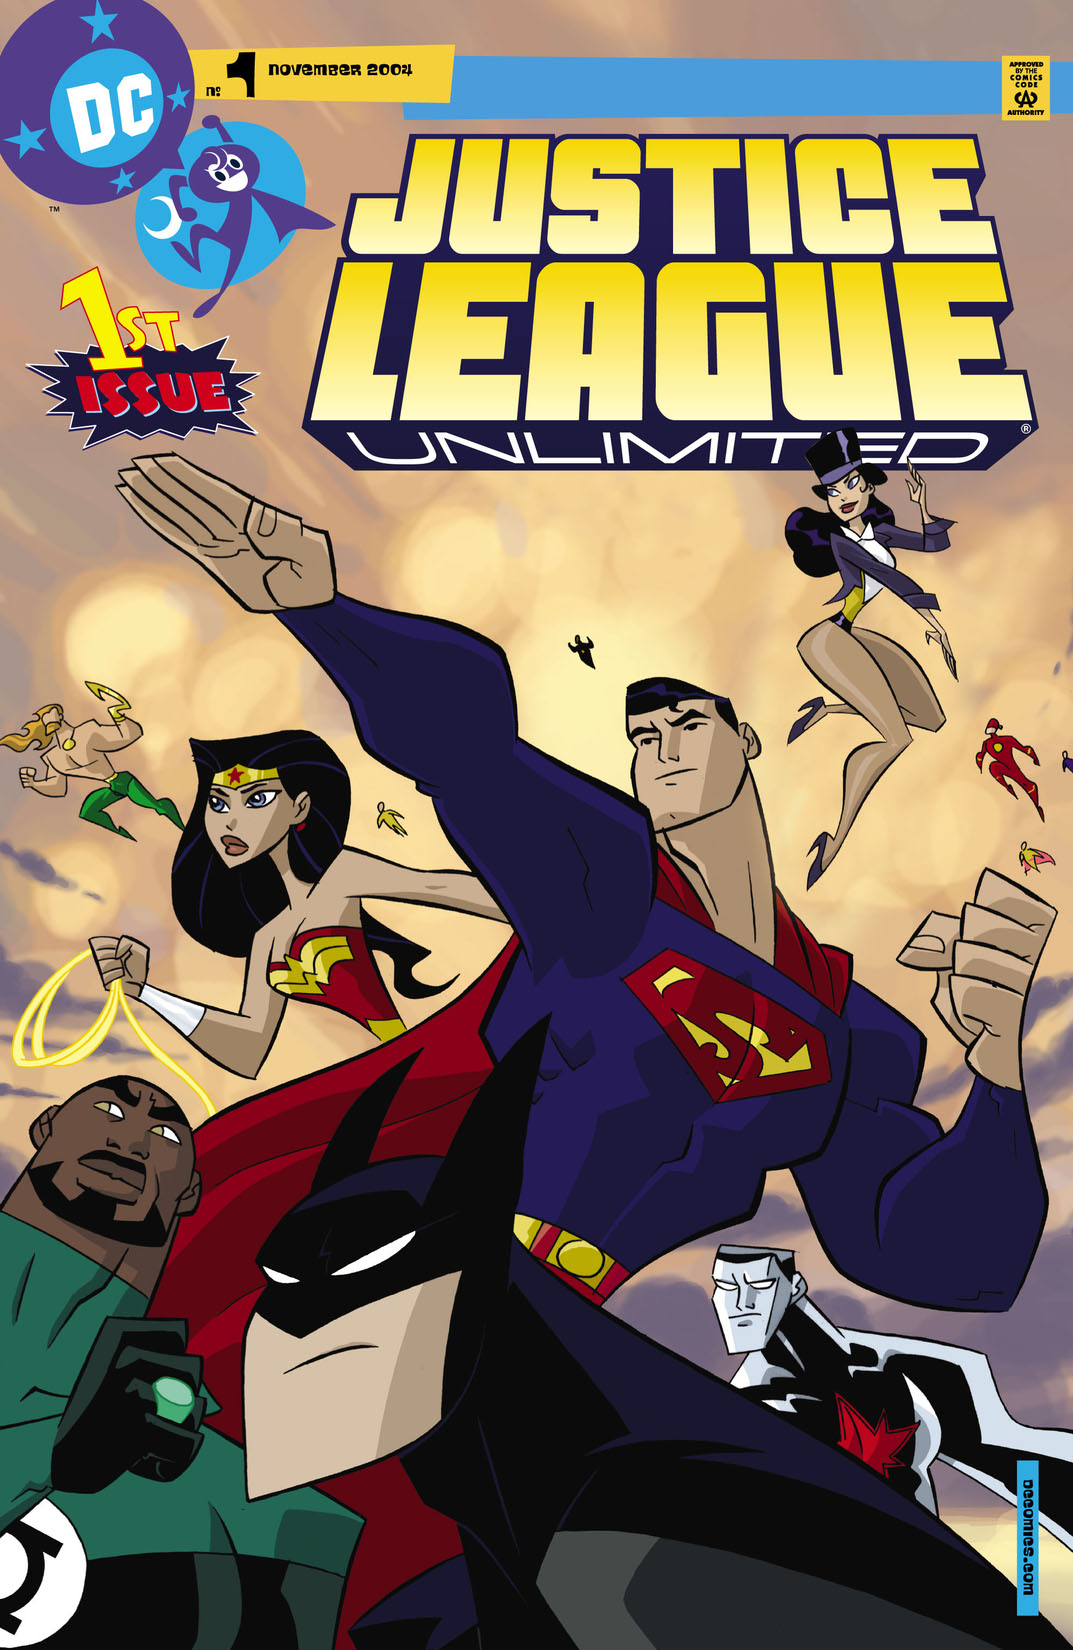 Justice League Unlimited #1 preview images